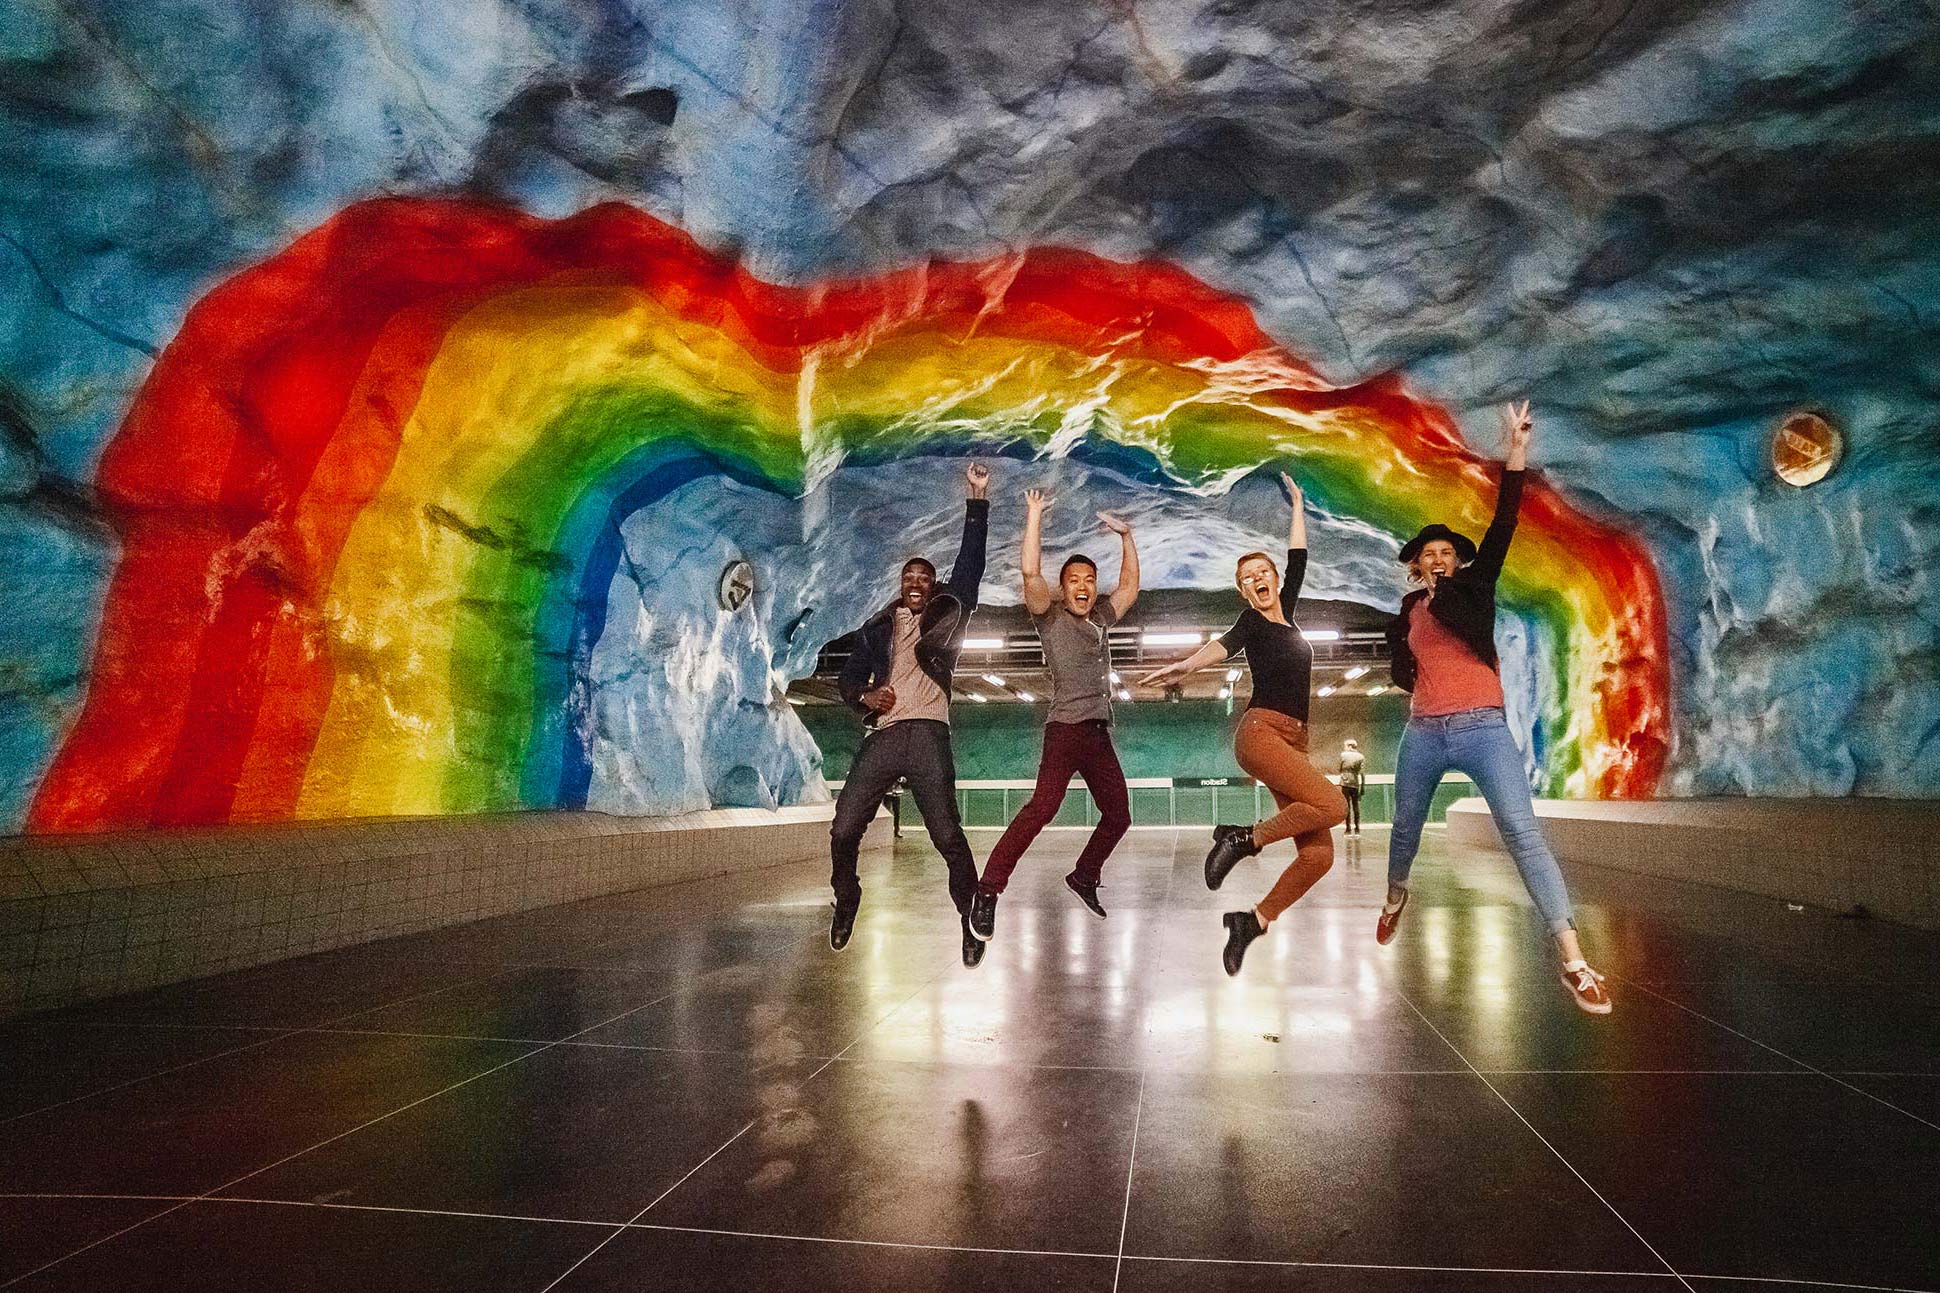 Rainbow art in Stadion Station in Stockholm, Sweden